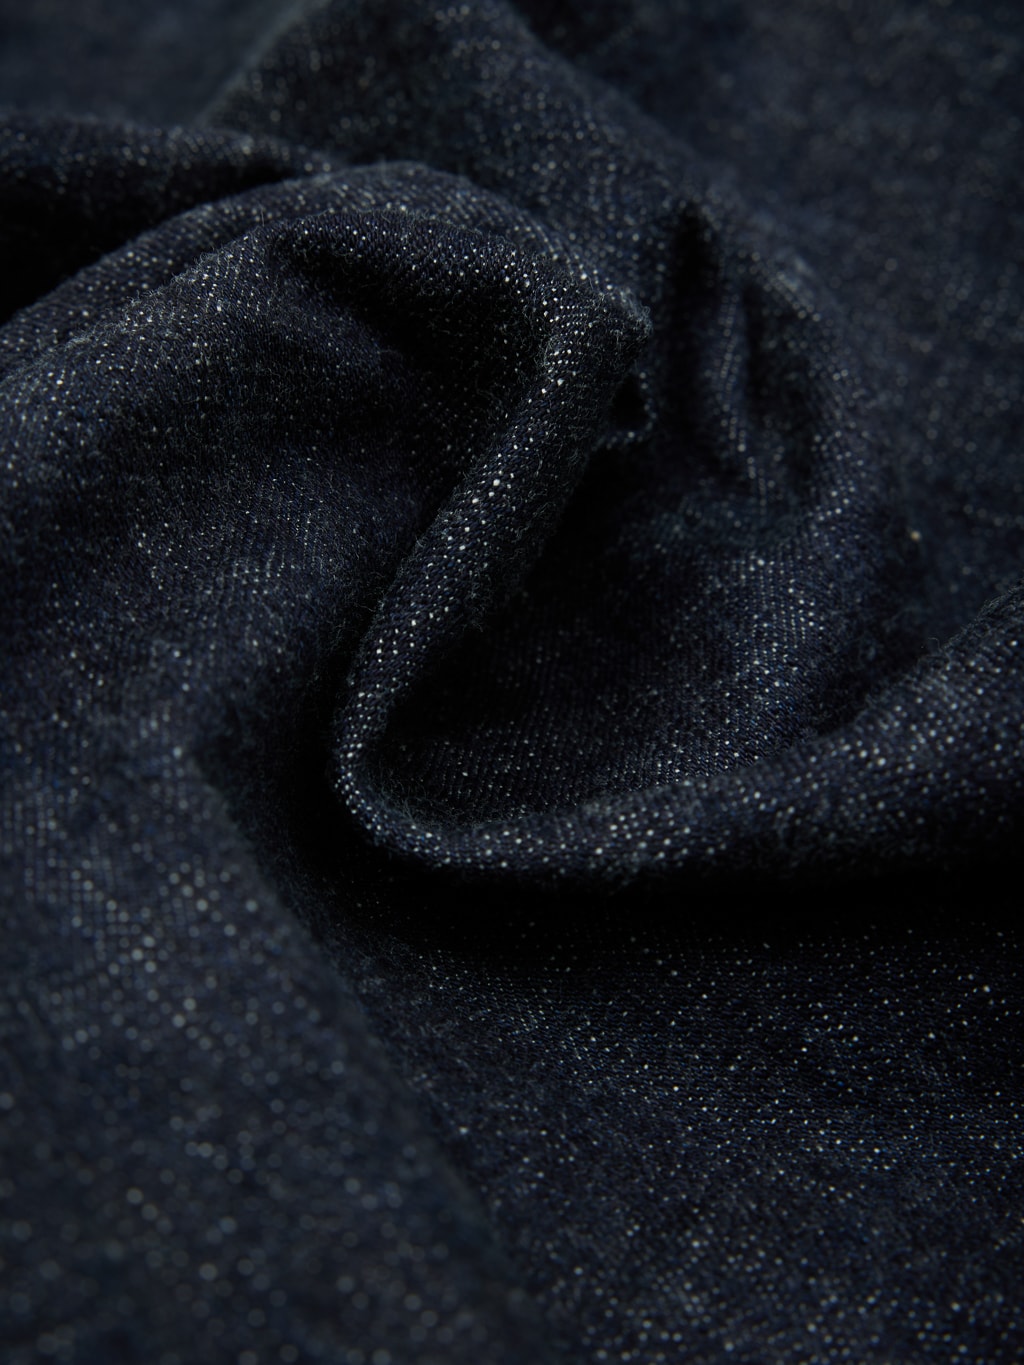 Fob factory denim pullover pocket shirt cotton fabric